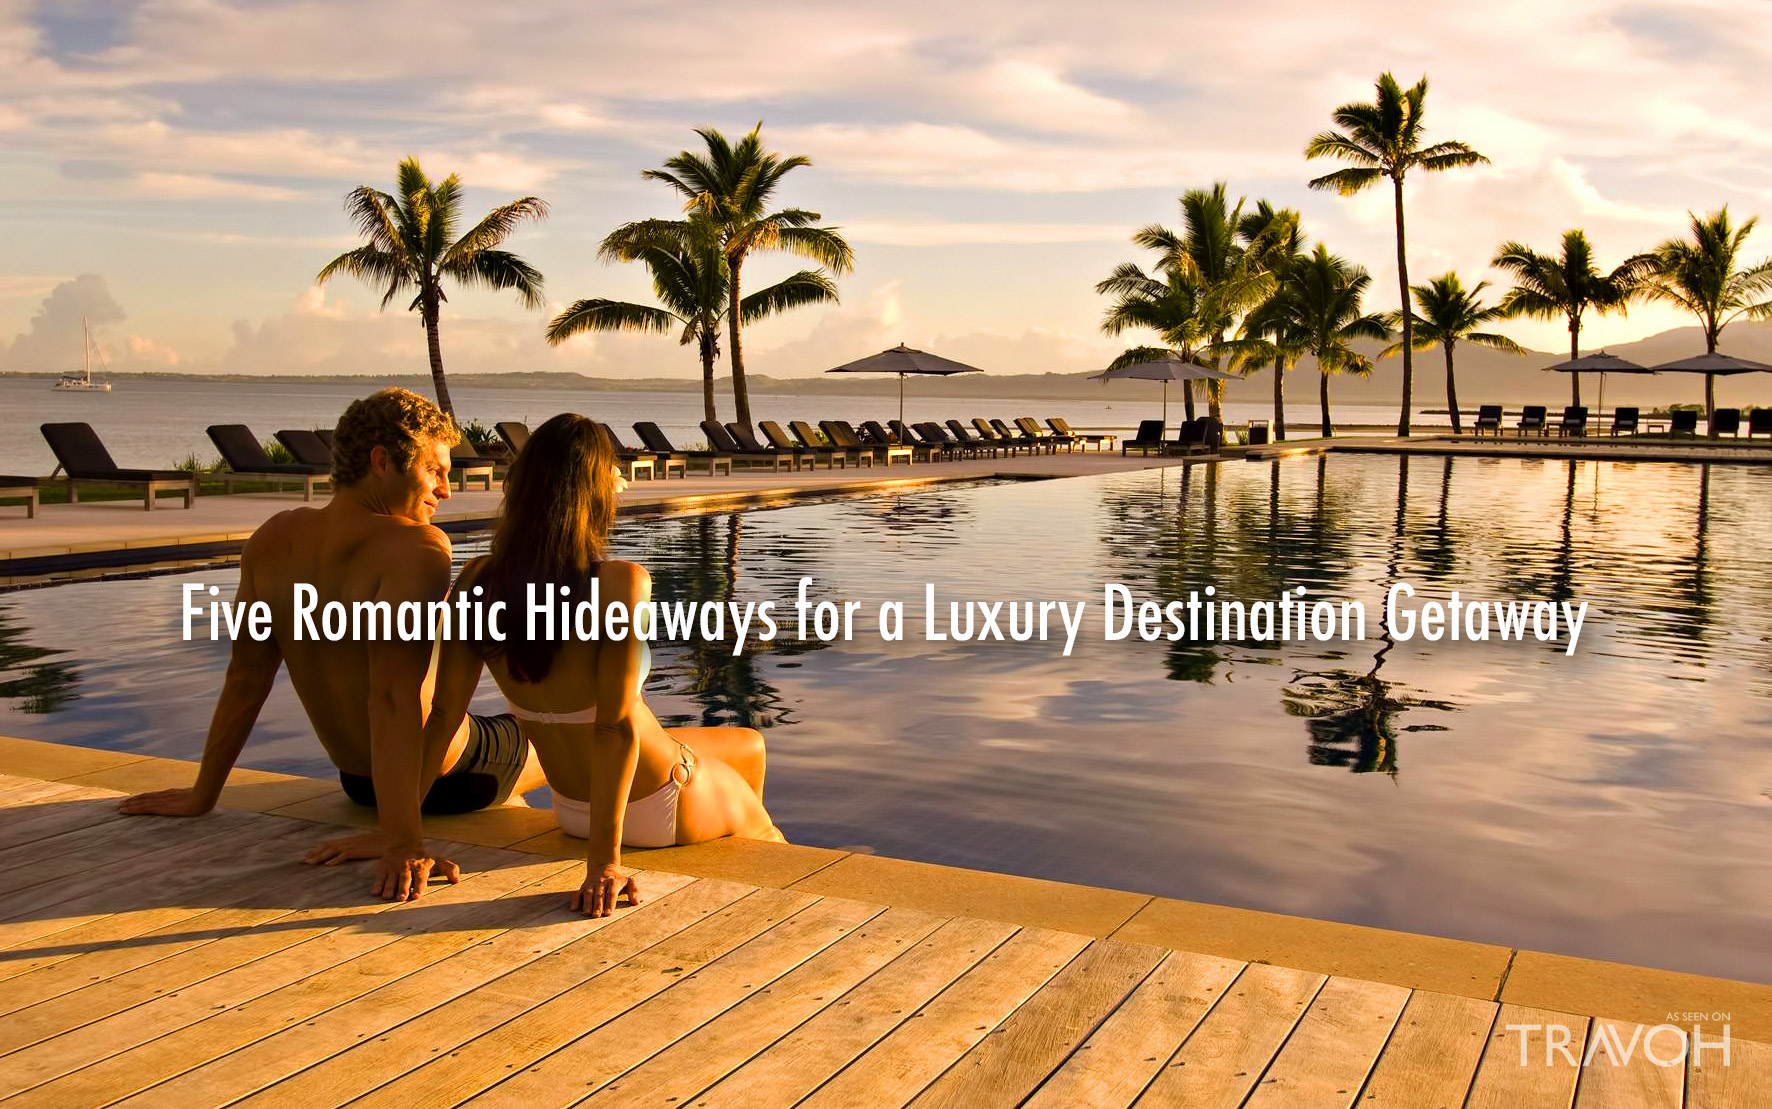 Five Romantic Hideaways for a Luxury Destination Getaway